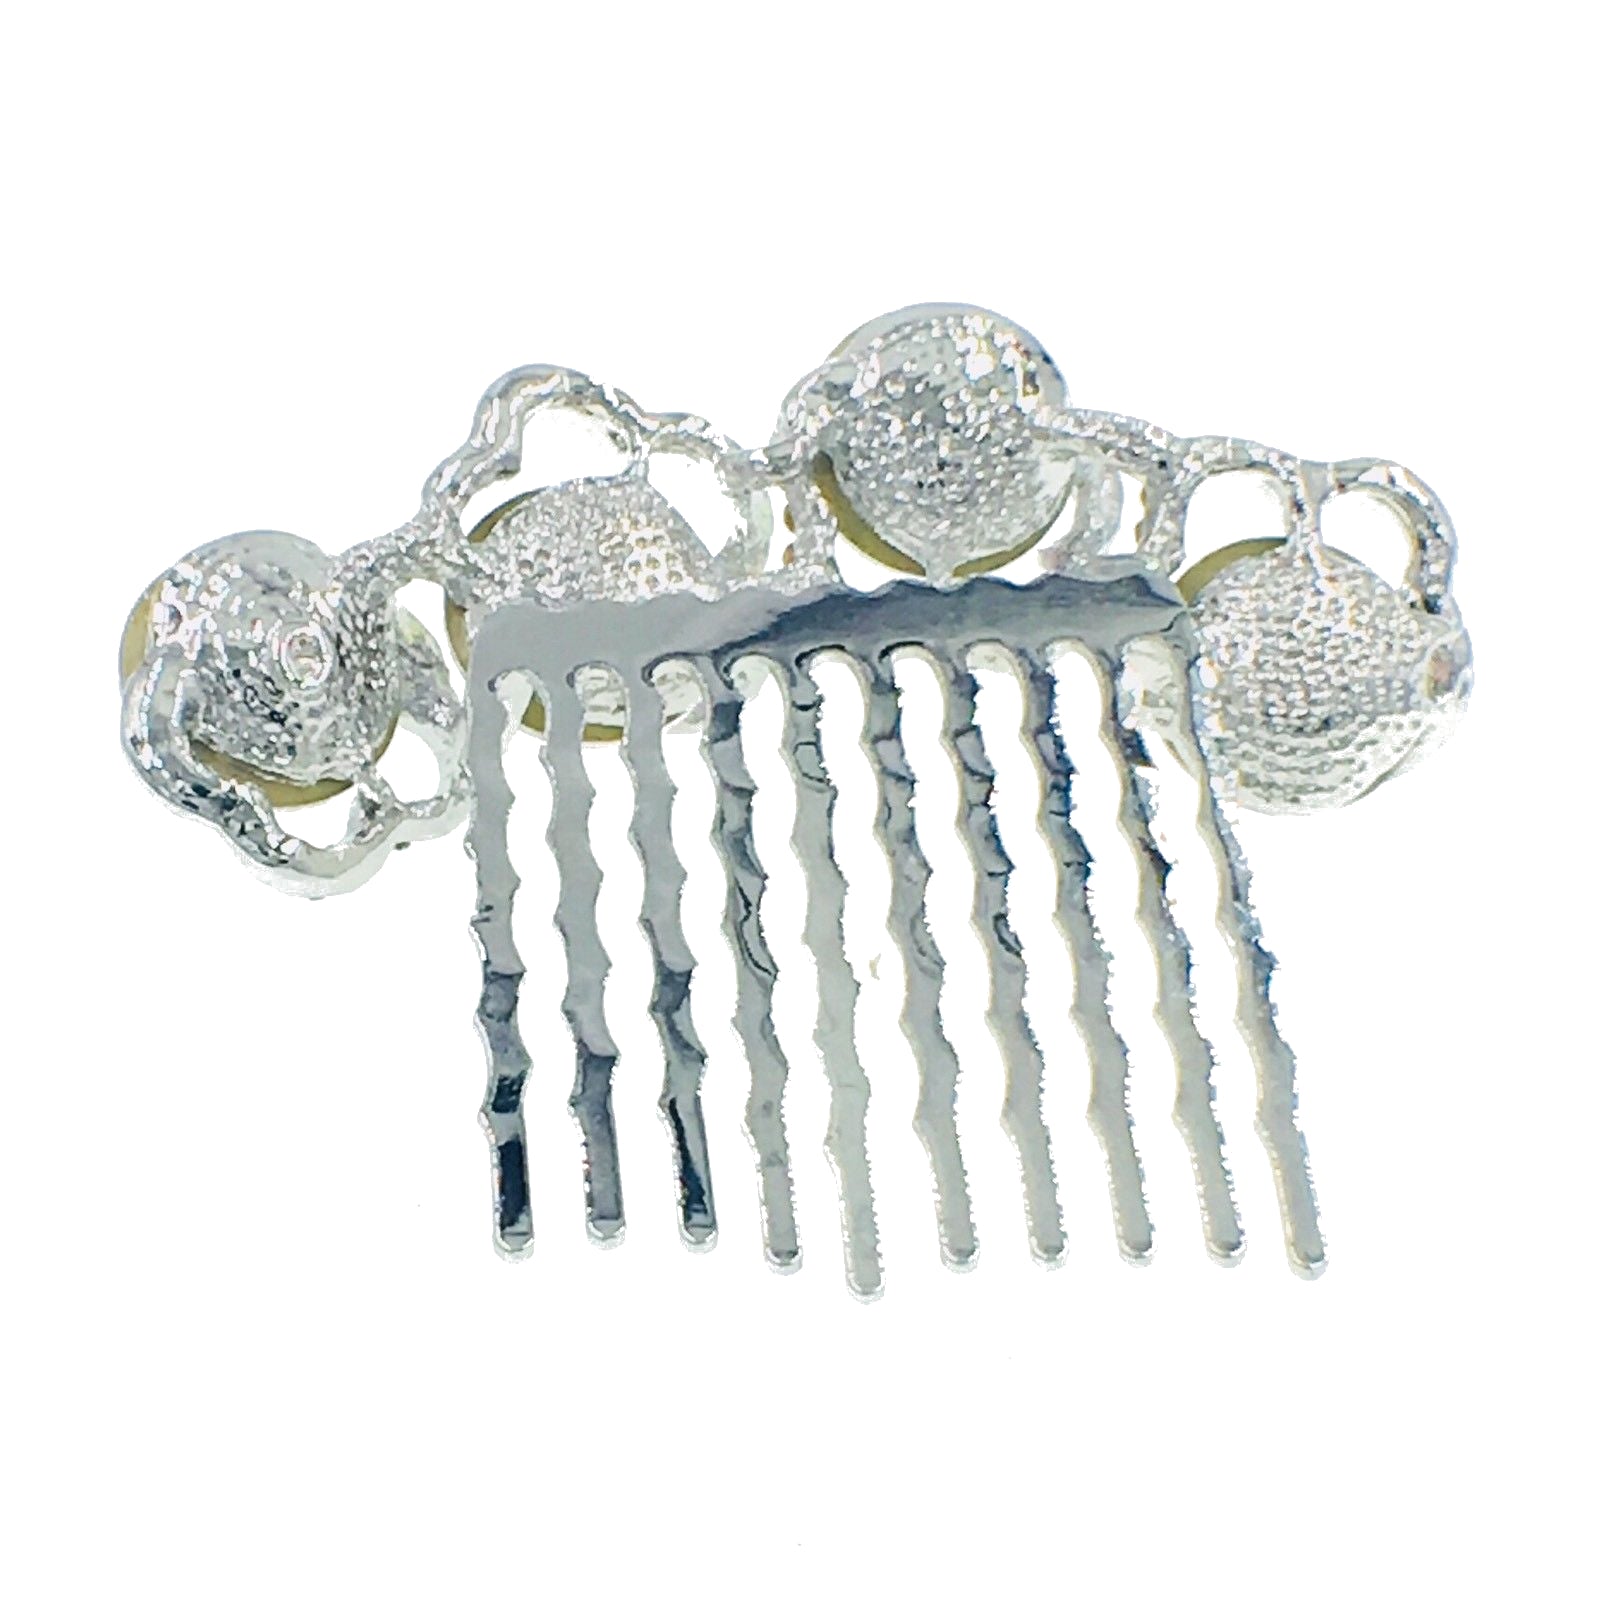 Quartet Floral Hair Comb Swarovski Crystal silver base AB Clear, Hair Comb - MOGHANT